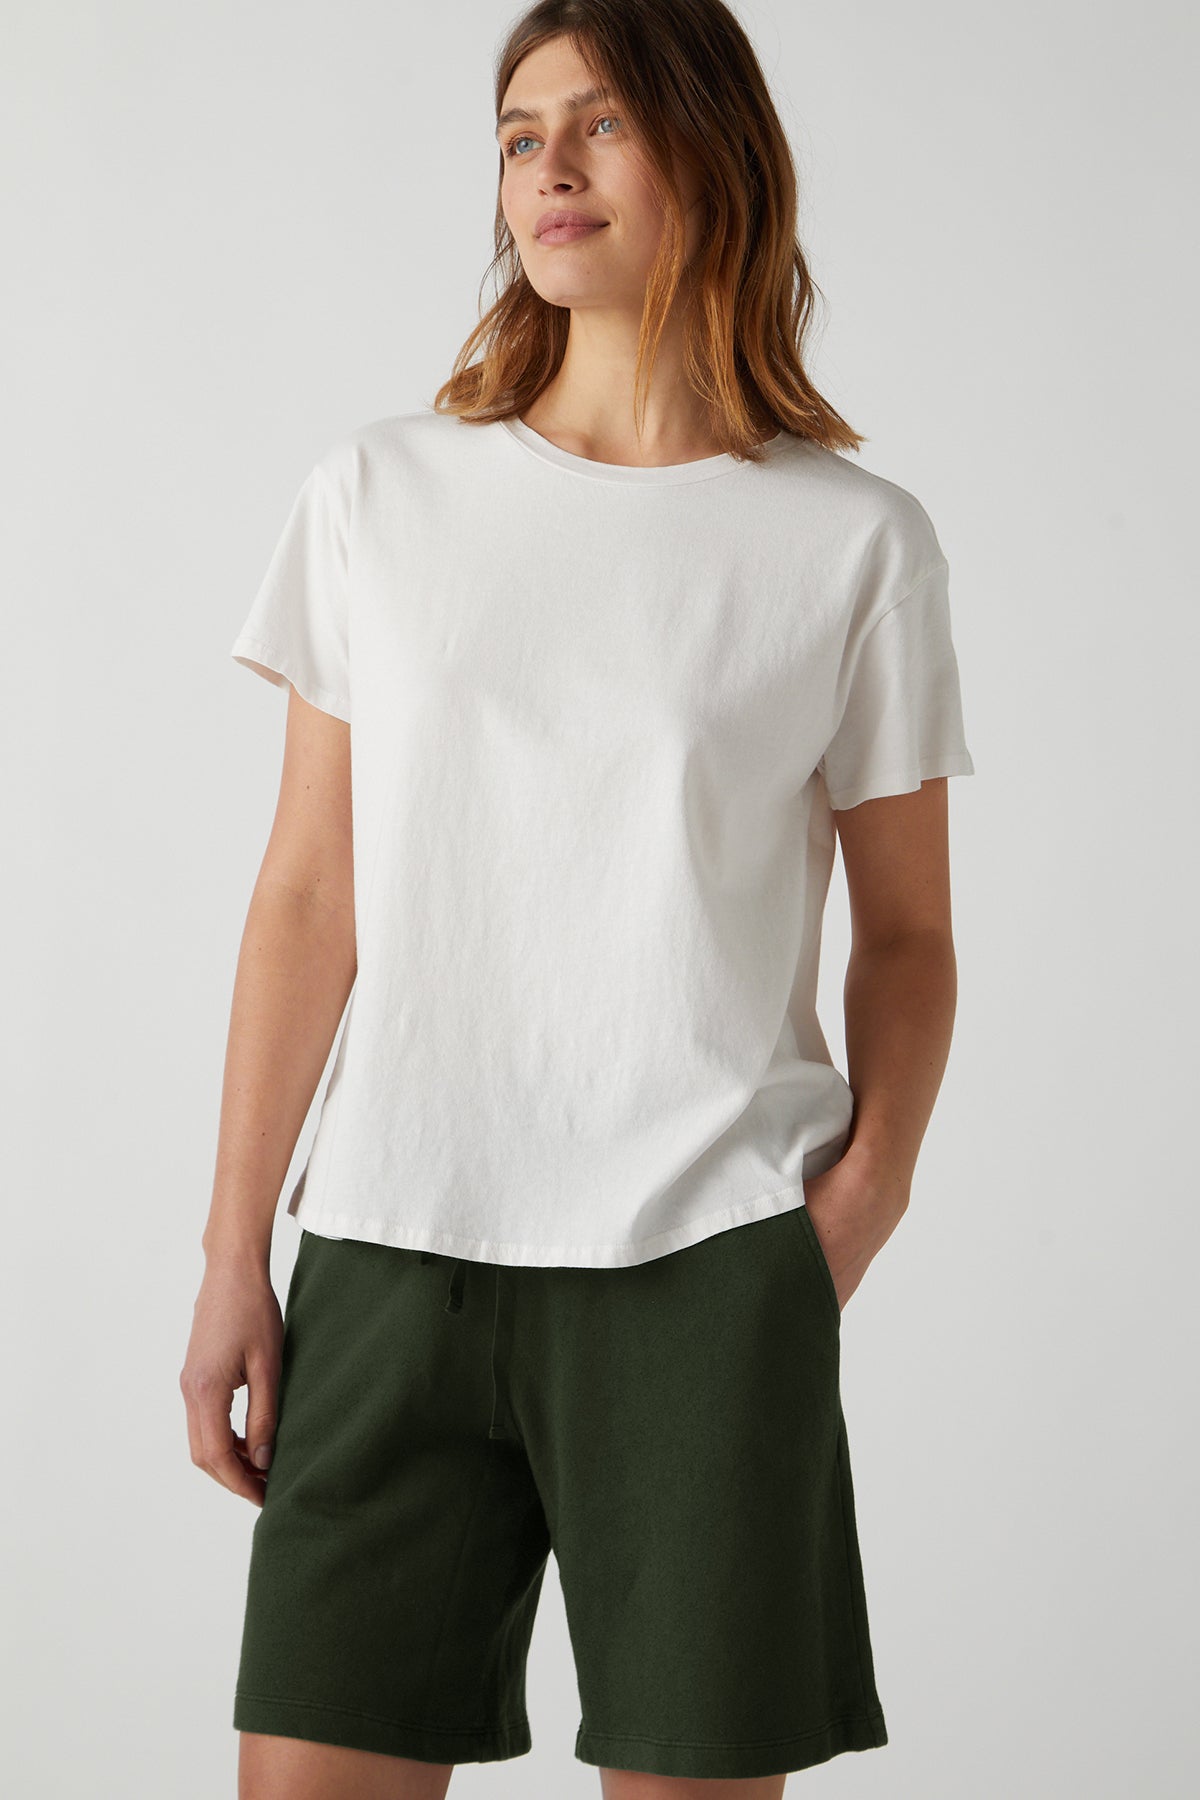 a woman wearing a white t-shirt and Velvet by Jenny Graham's LAGUNA SWEATSHORT.-26041211781313